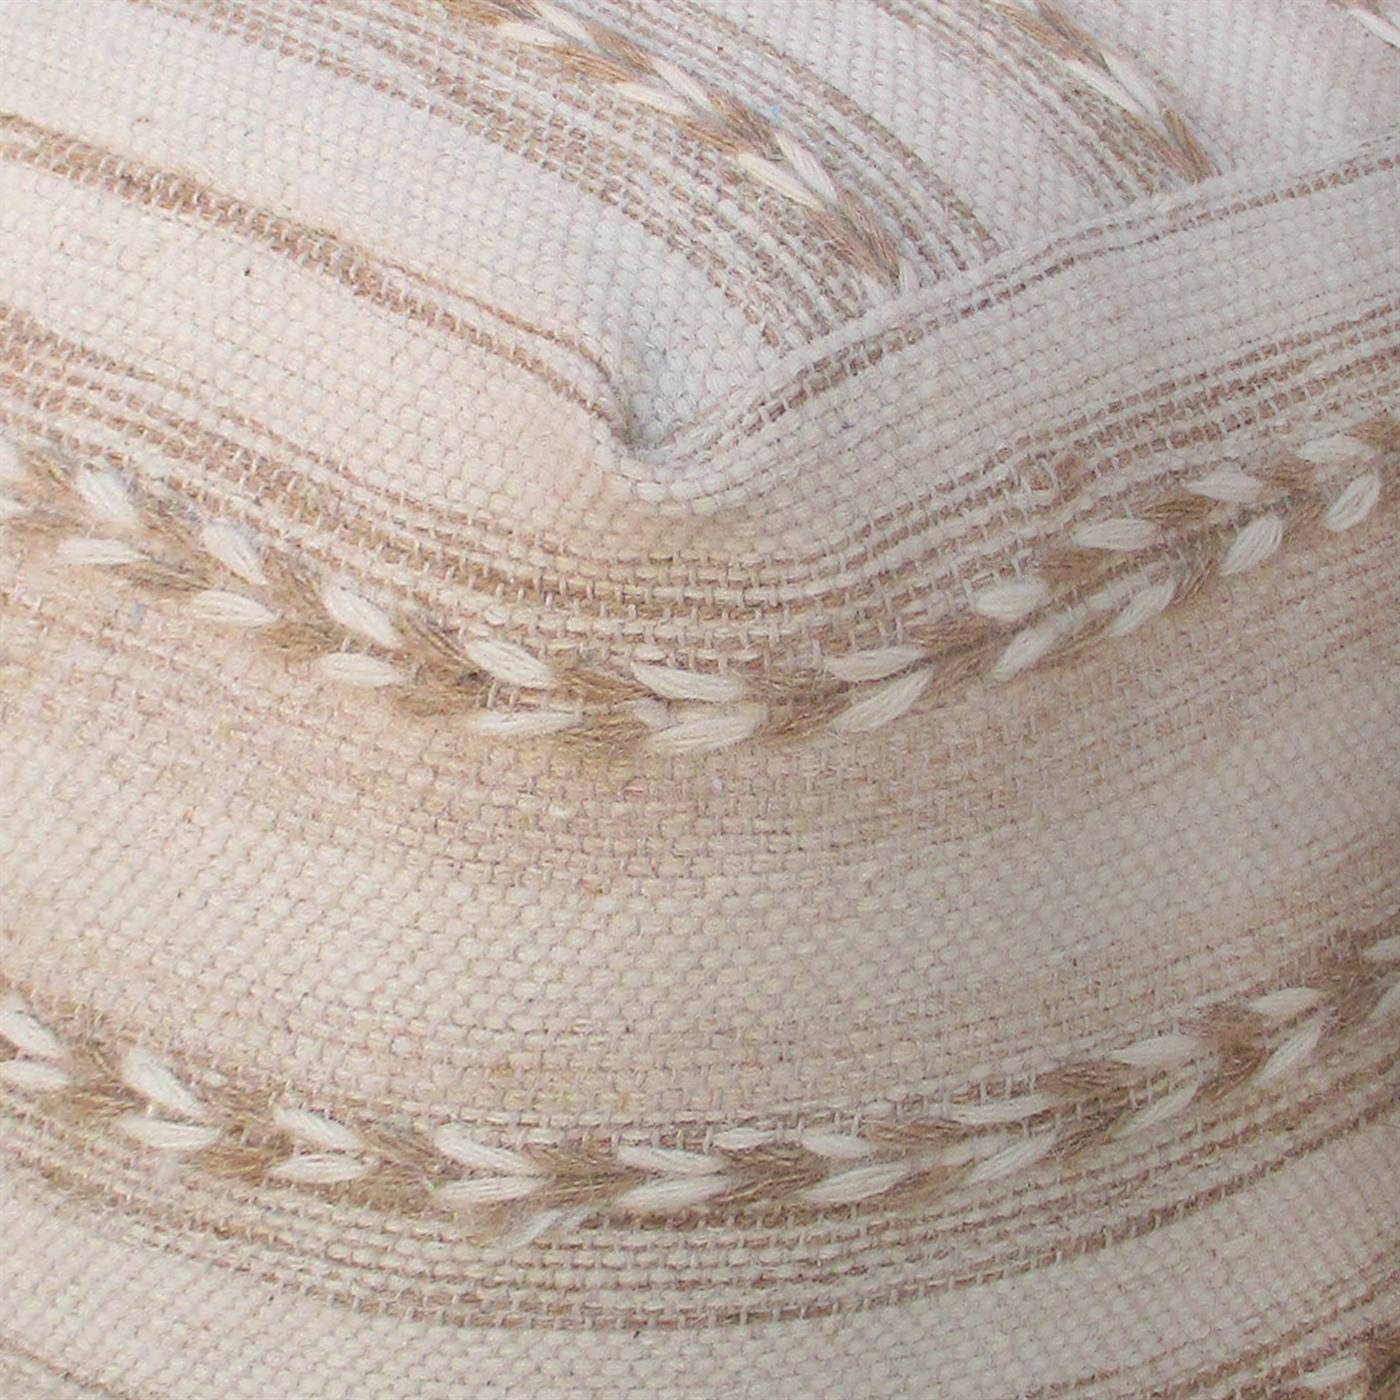 Arsanio Pouf, 40x40x40 cm, Natural White, Beige, Wool, Hand Woven, Pitloom, Flat Weave